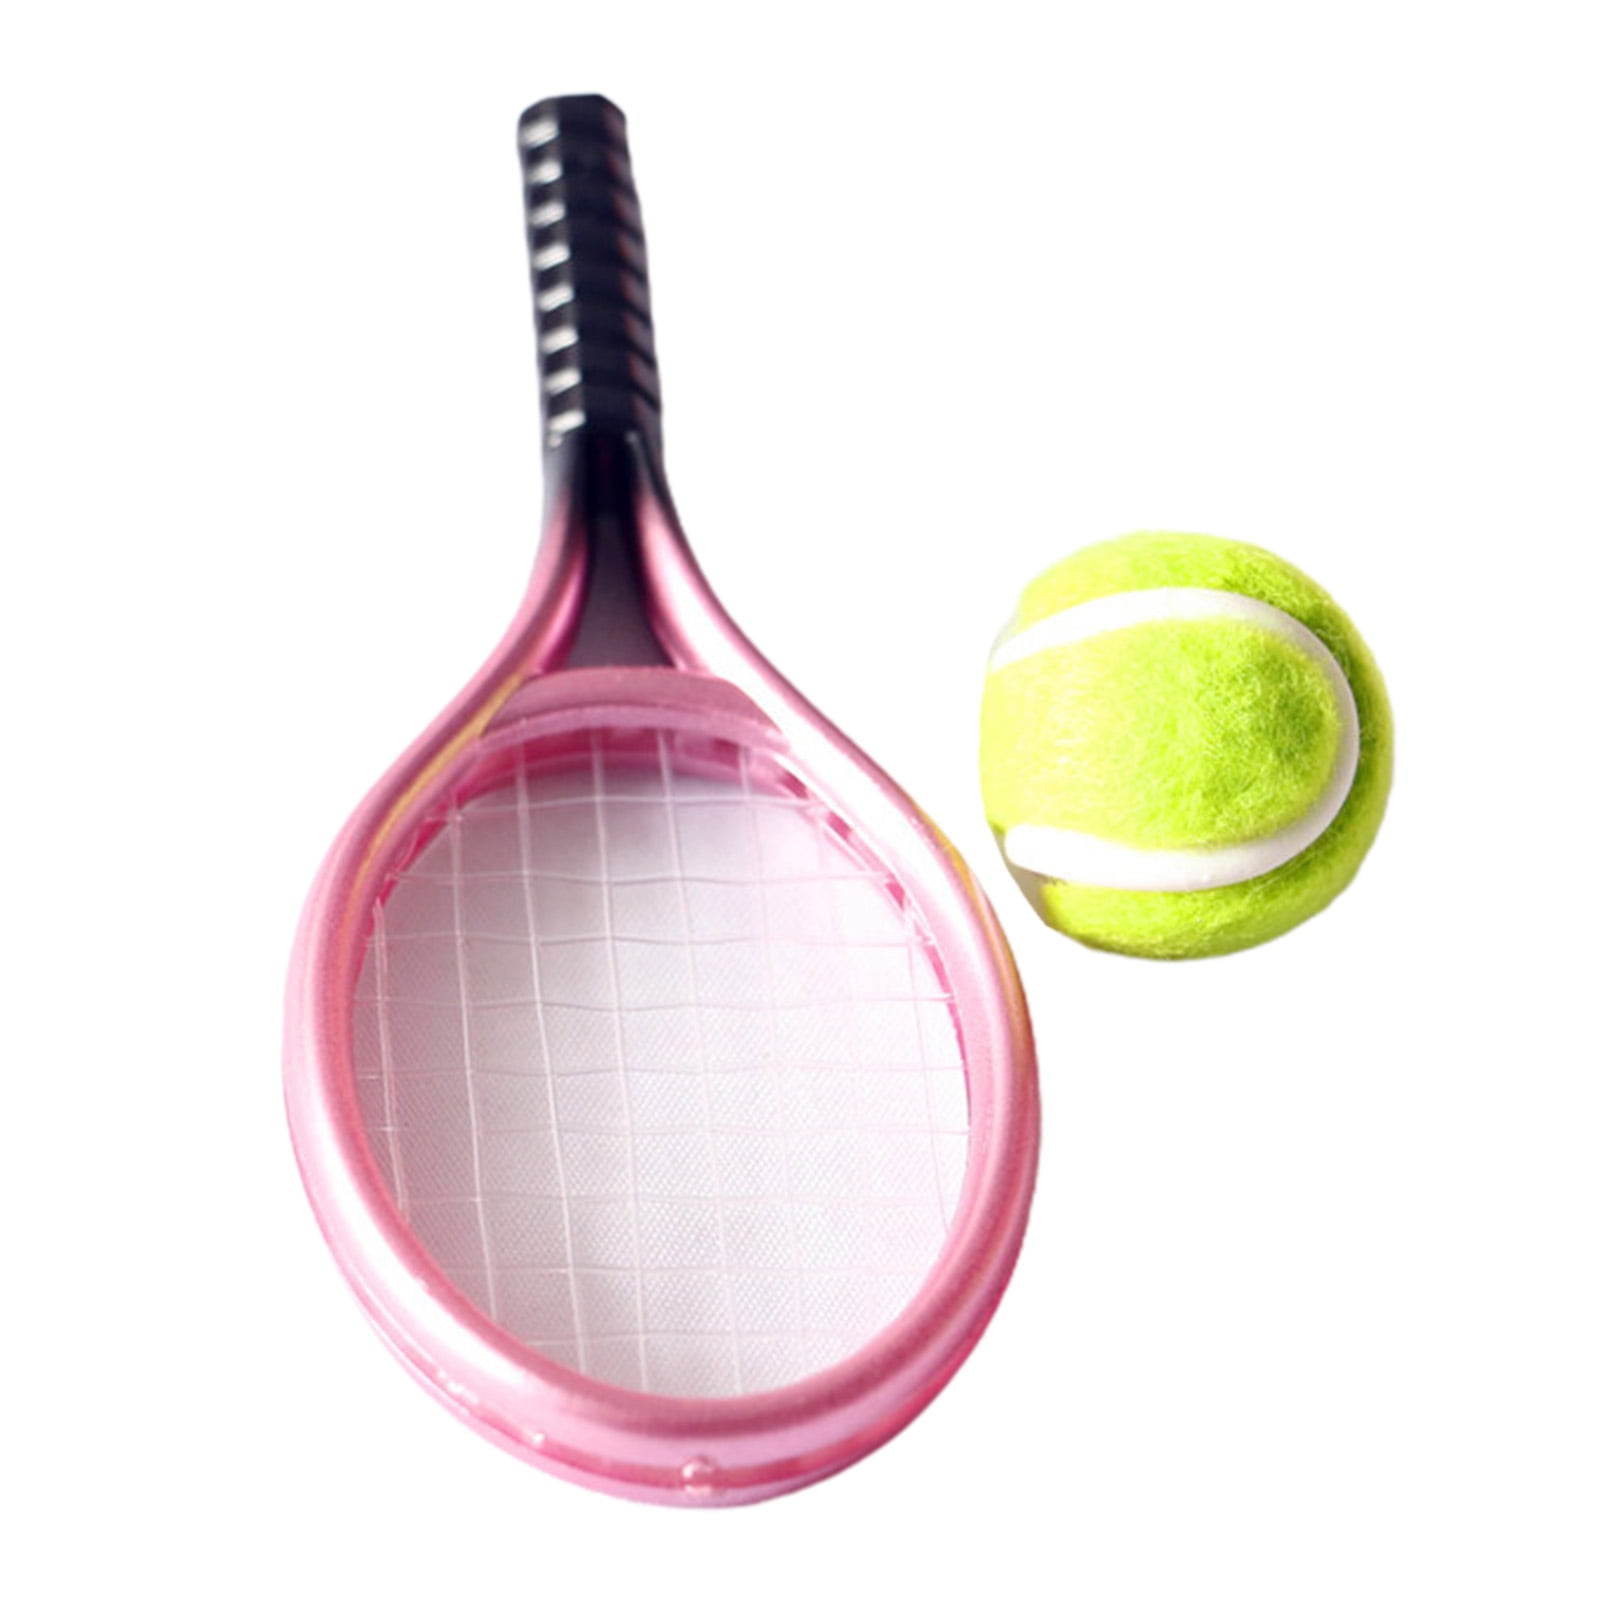 1/12 Dollhouse Miniature Sports Supplies Tennis Ball Racket Set Display ACCS 